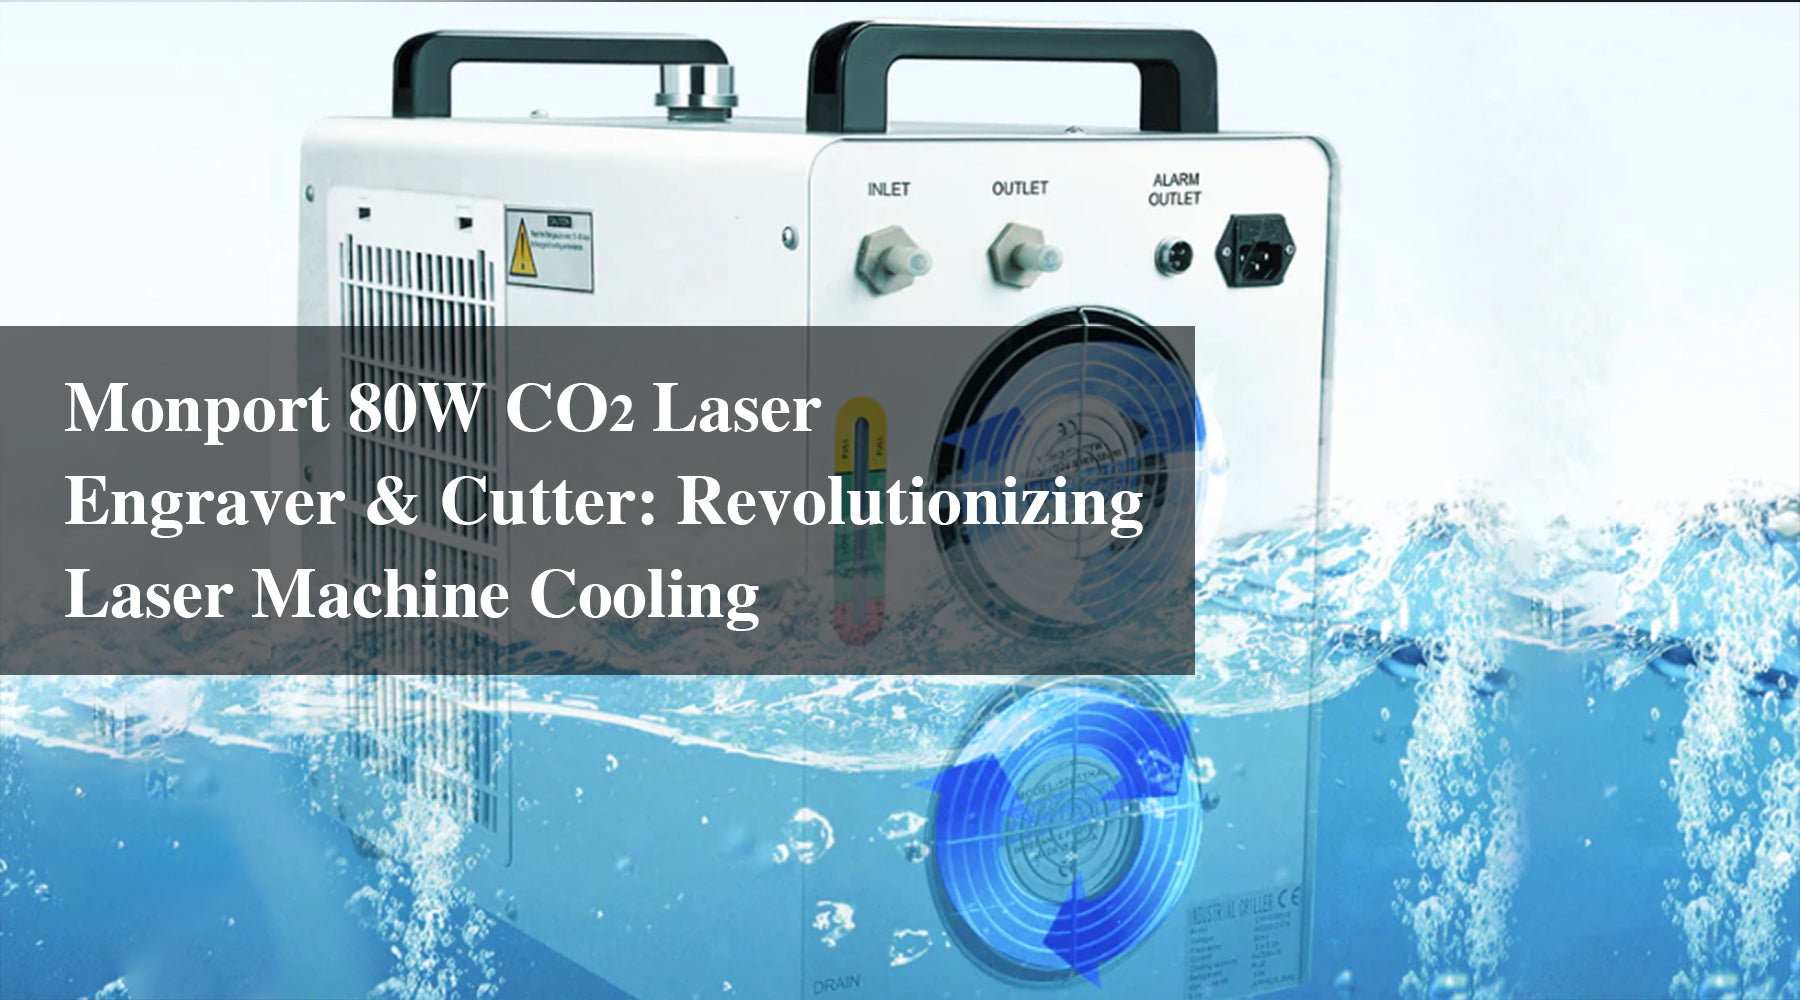 Monport 80W CO2 Laser Engraver & Cutter: Revolutionizing Laser Machine Cooling